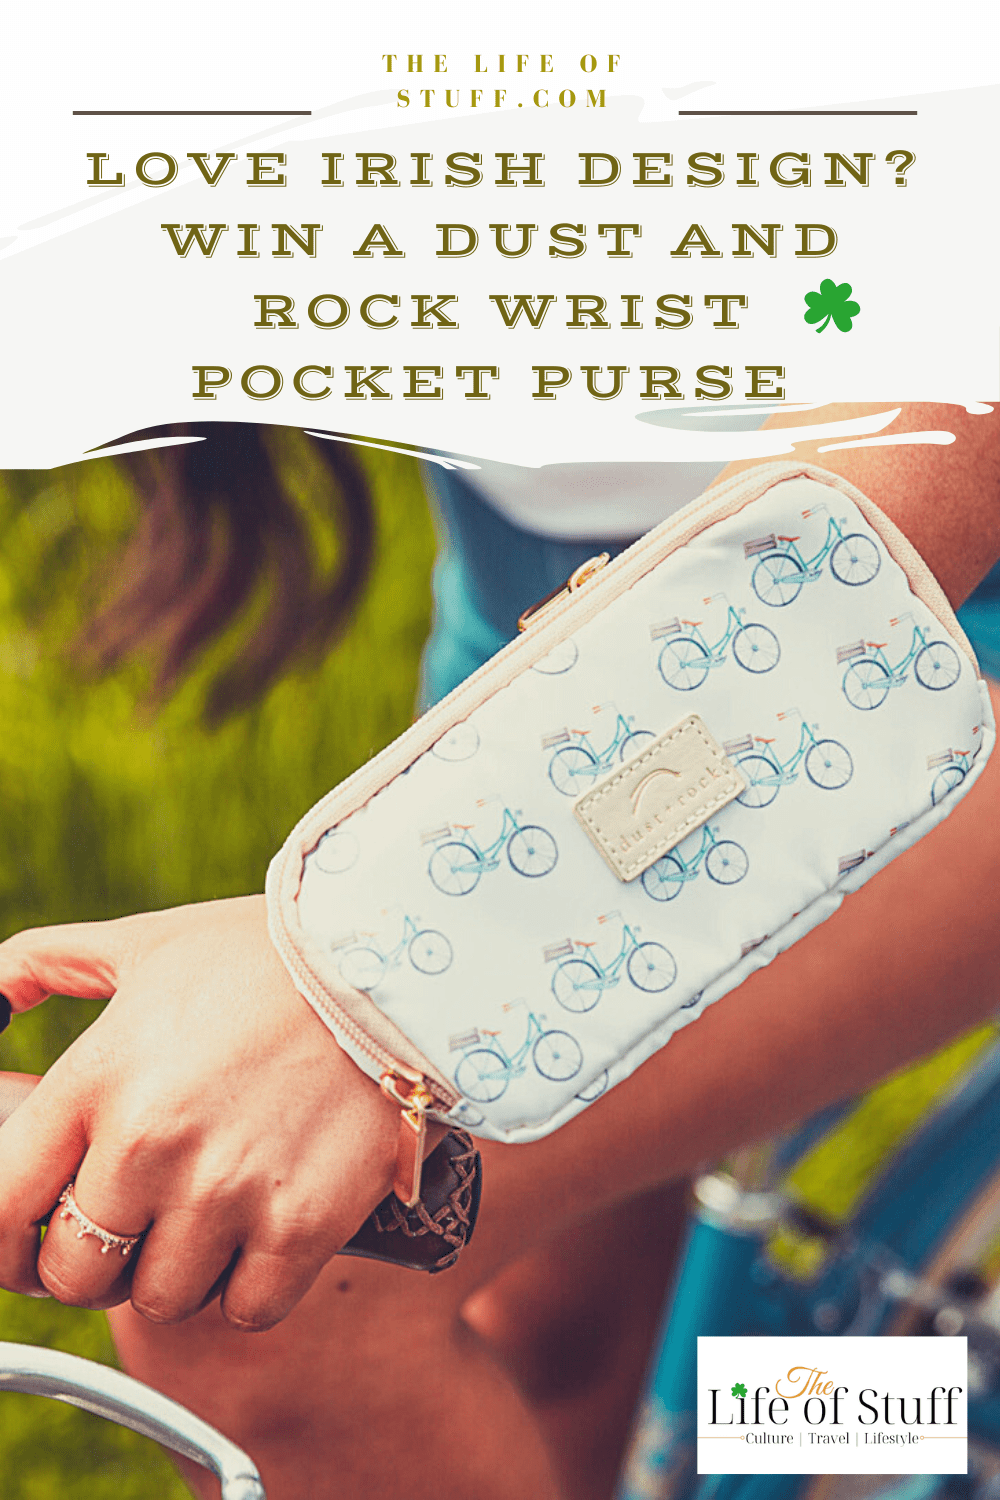 Love Irish Design? WIN a Dust and Rock Wrist Pocket Purse - The Life of Stuff